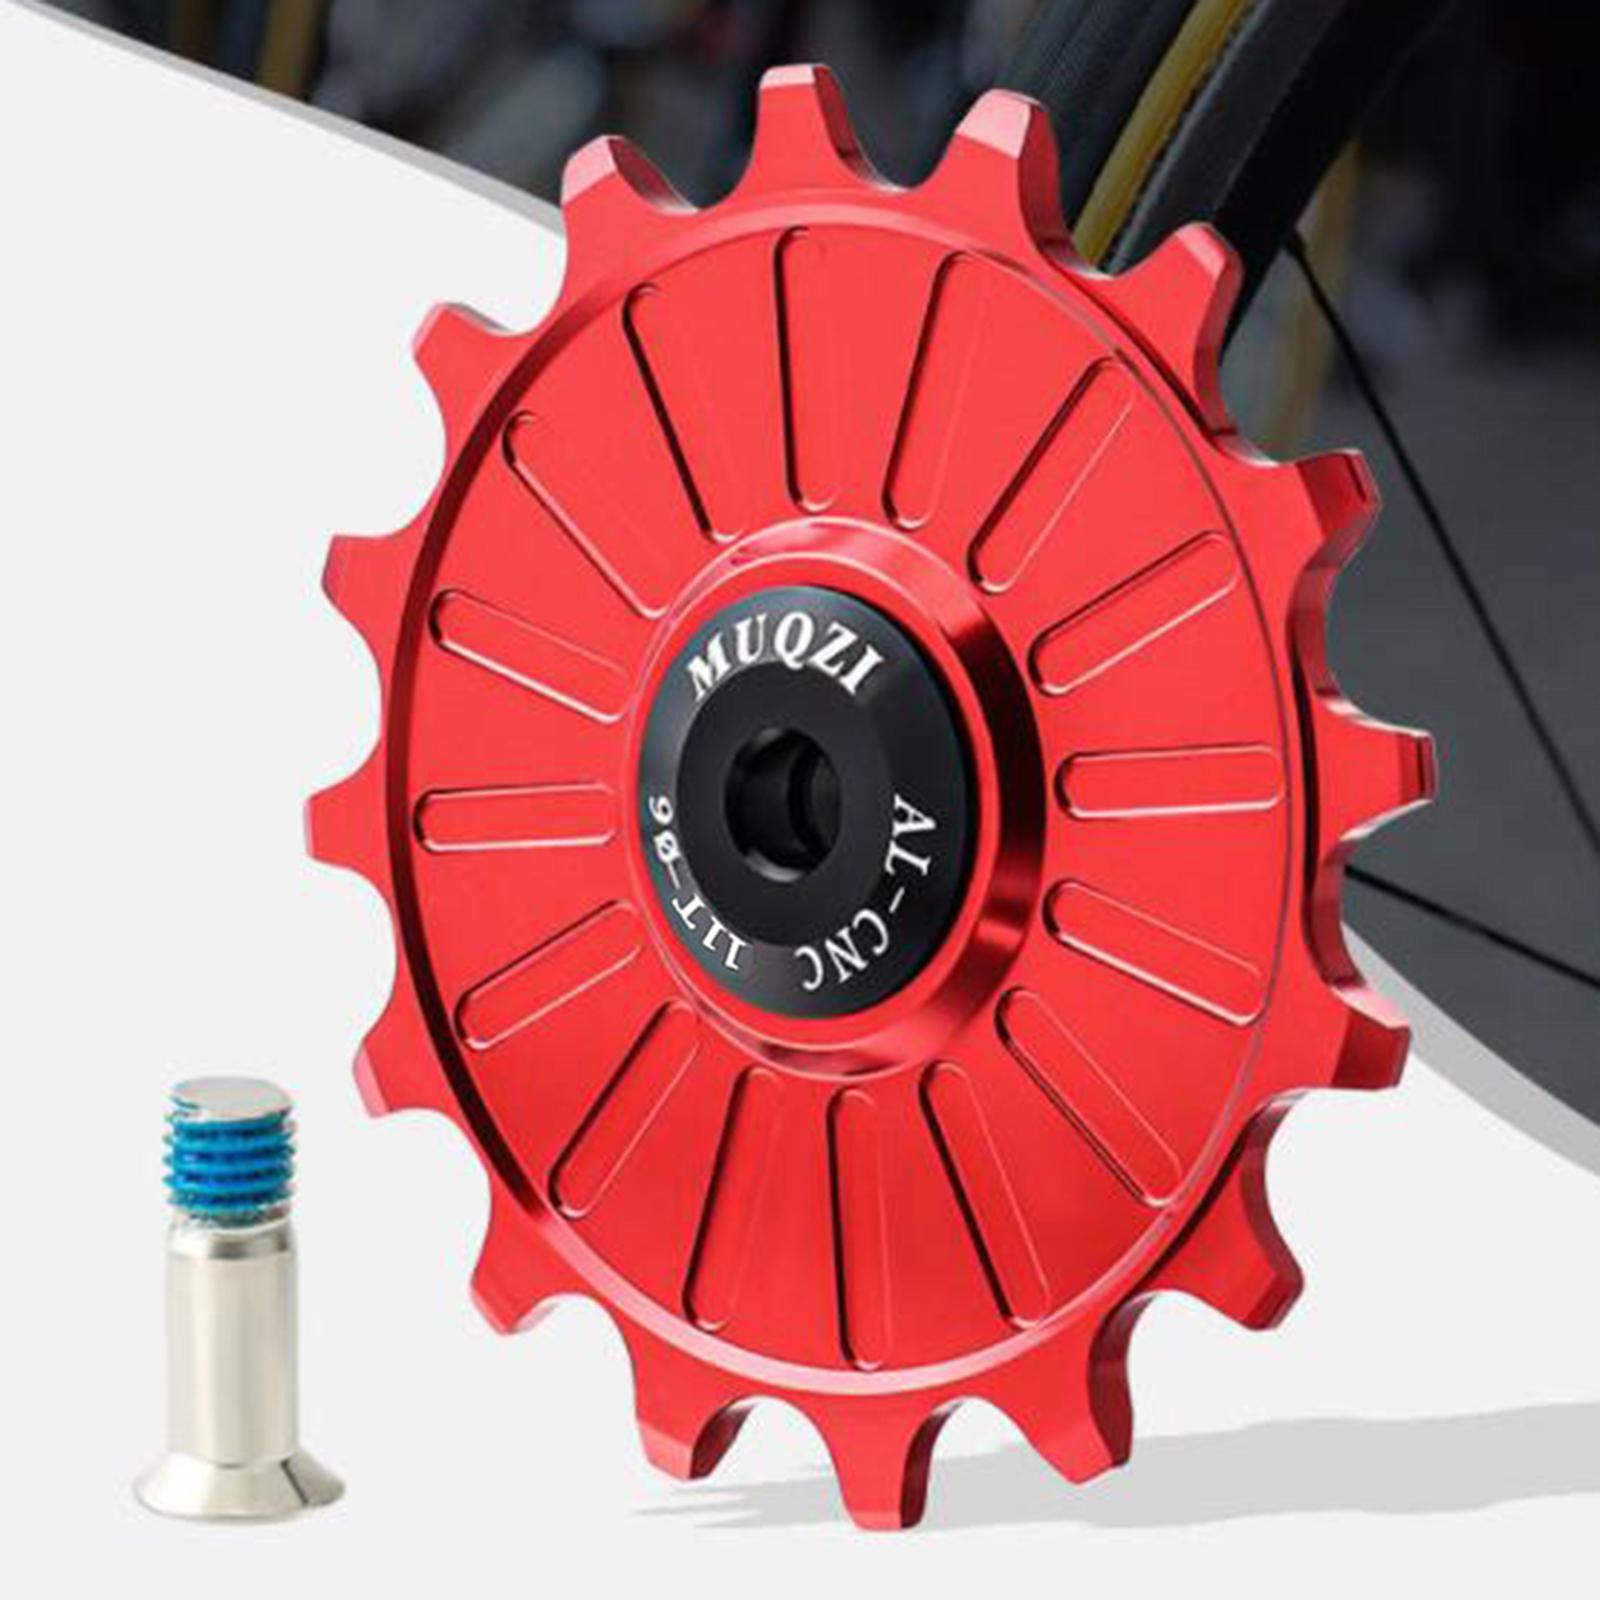 2x Bike Guide Wheel, Aluminum Alloy  Rear Derailleur Jockey Wheel Rear Derailleur Pulley Bike Accessories